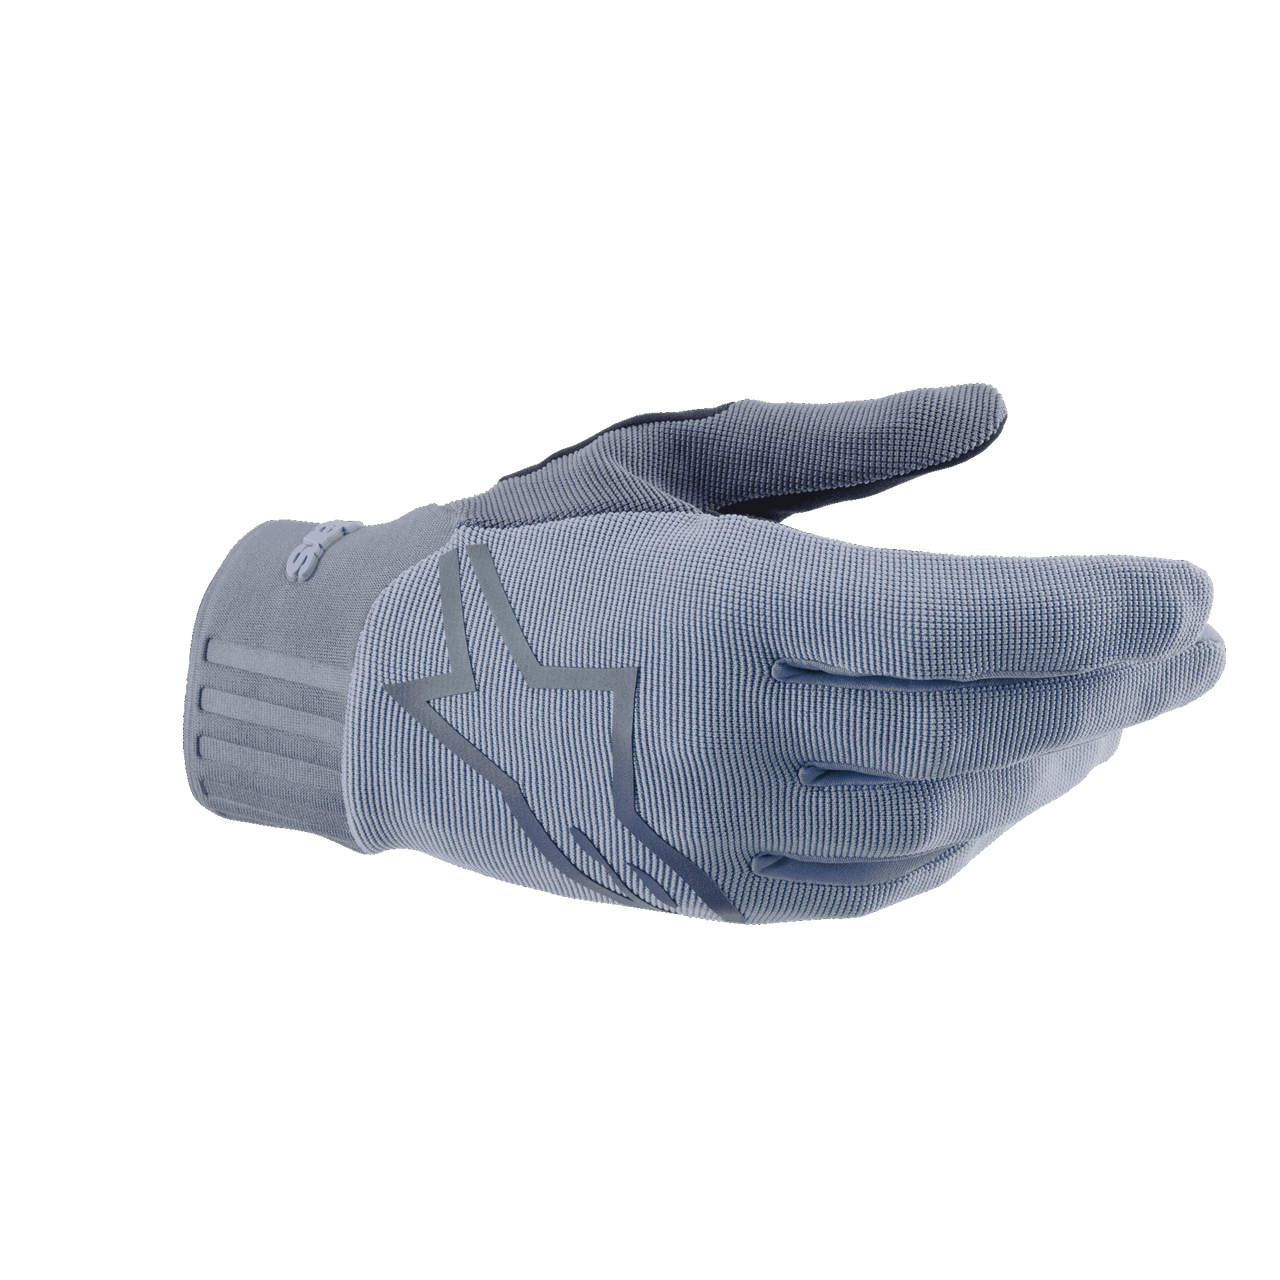 MTB Gloves